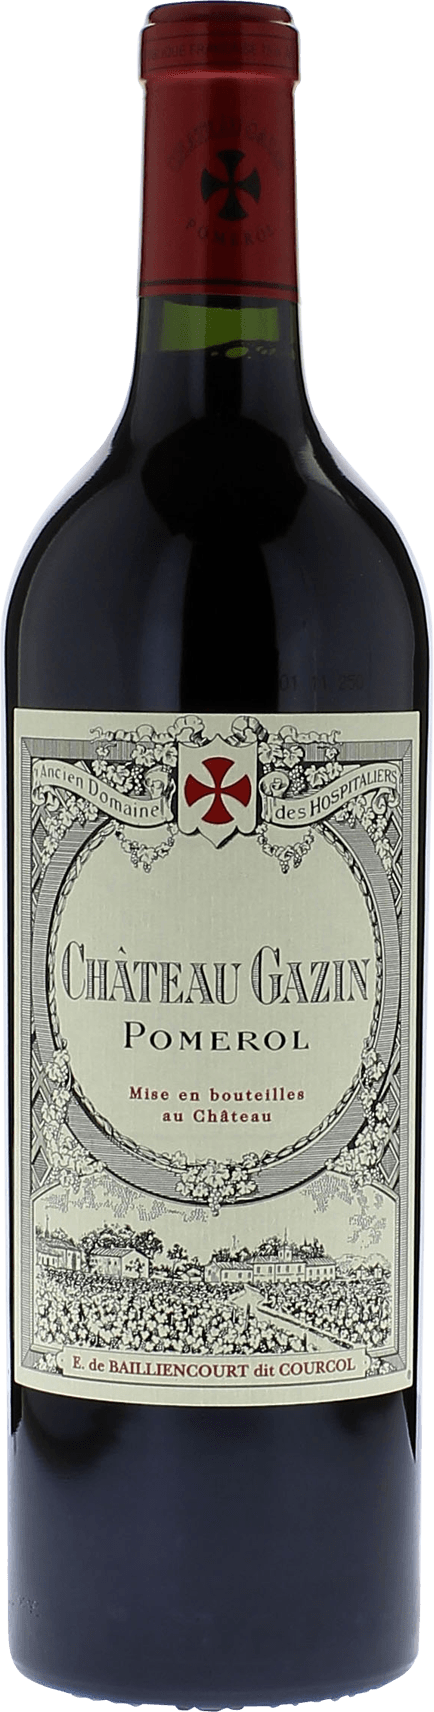 Gazin 1961  Pomerol, Bordeaux rouge